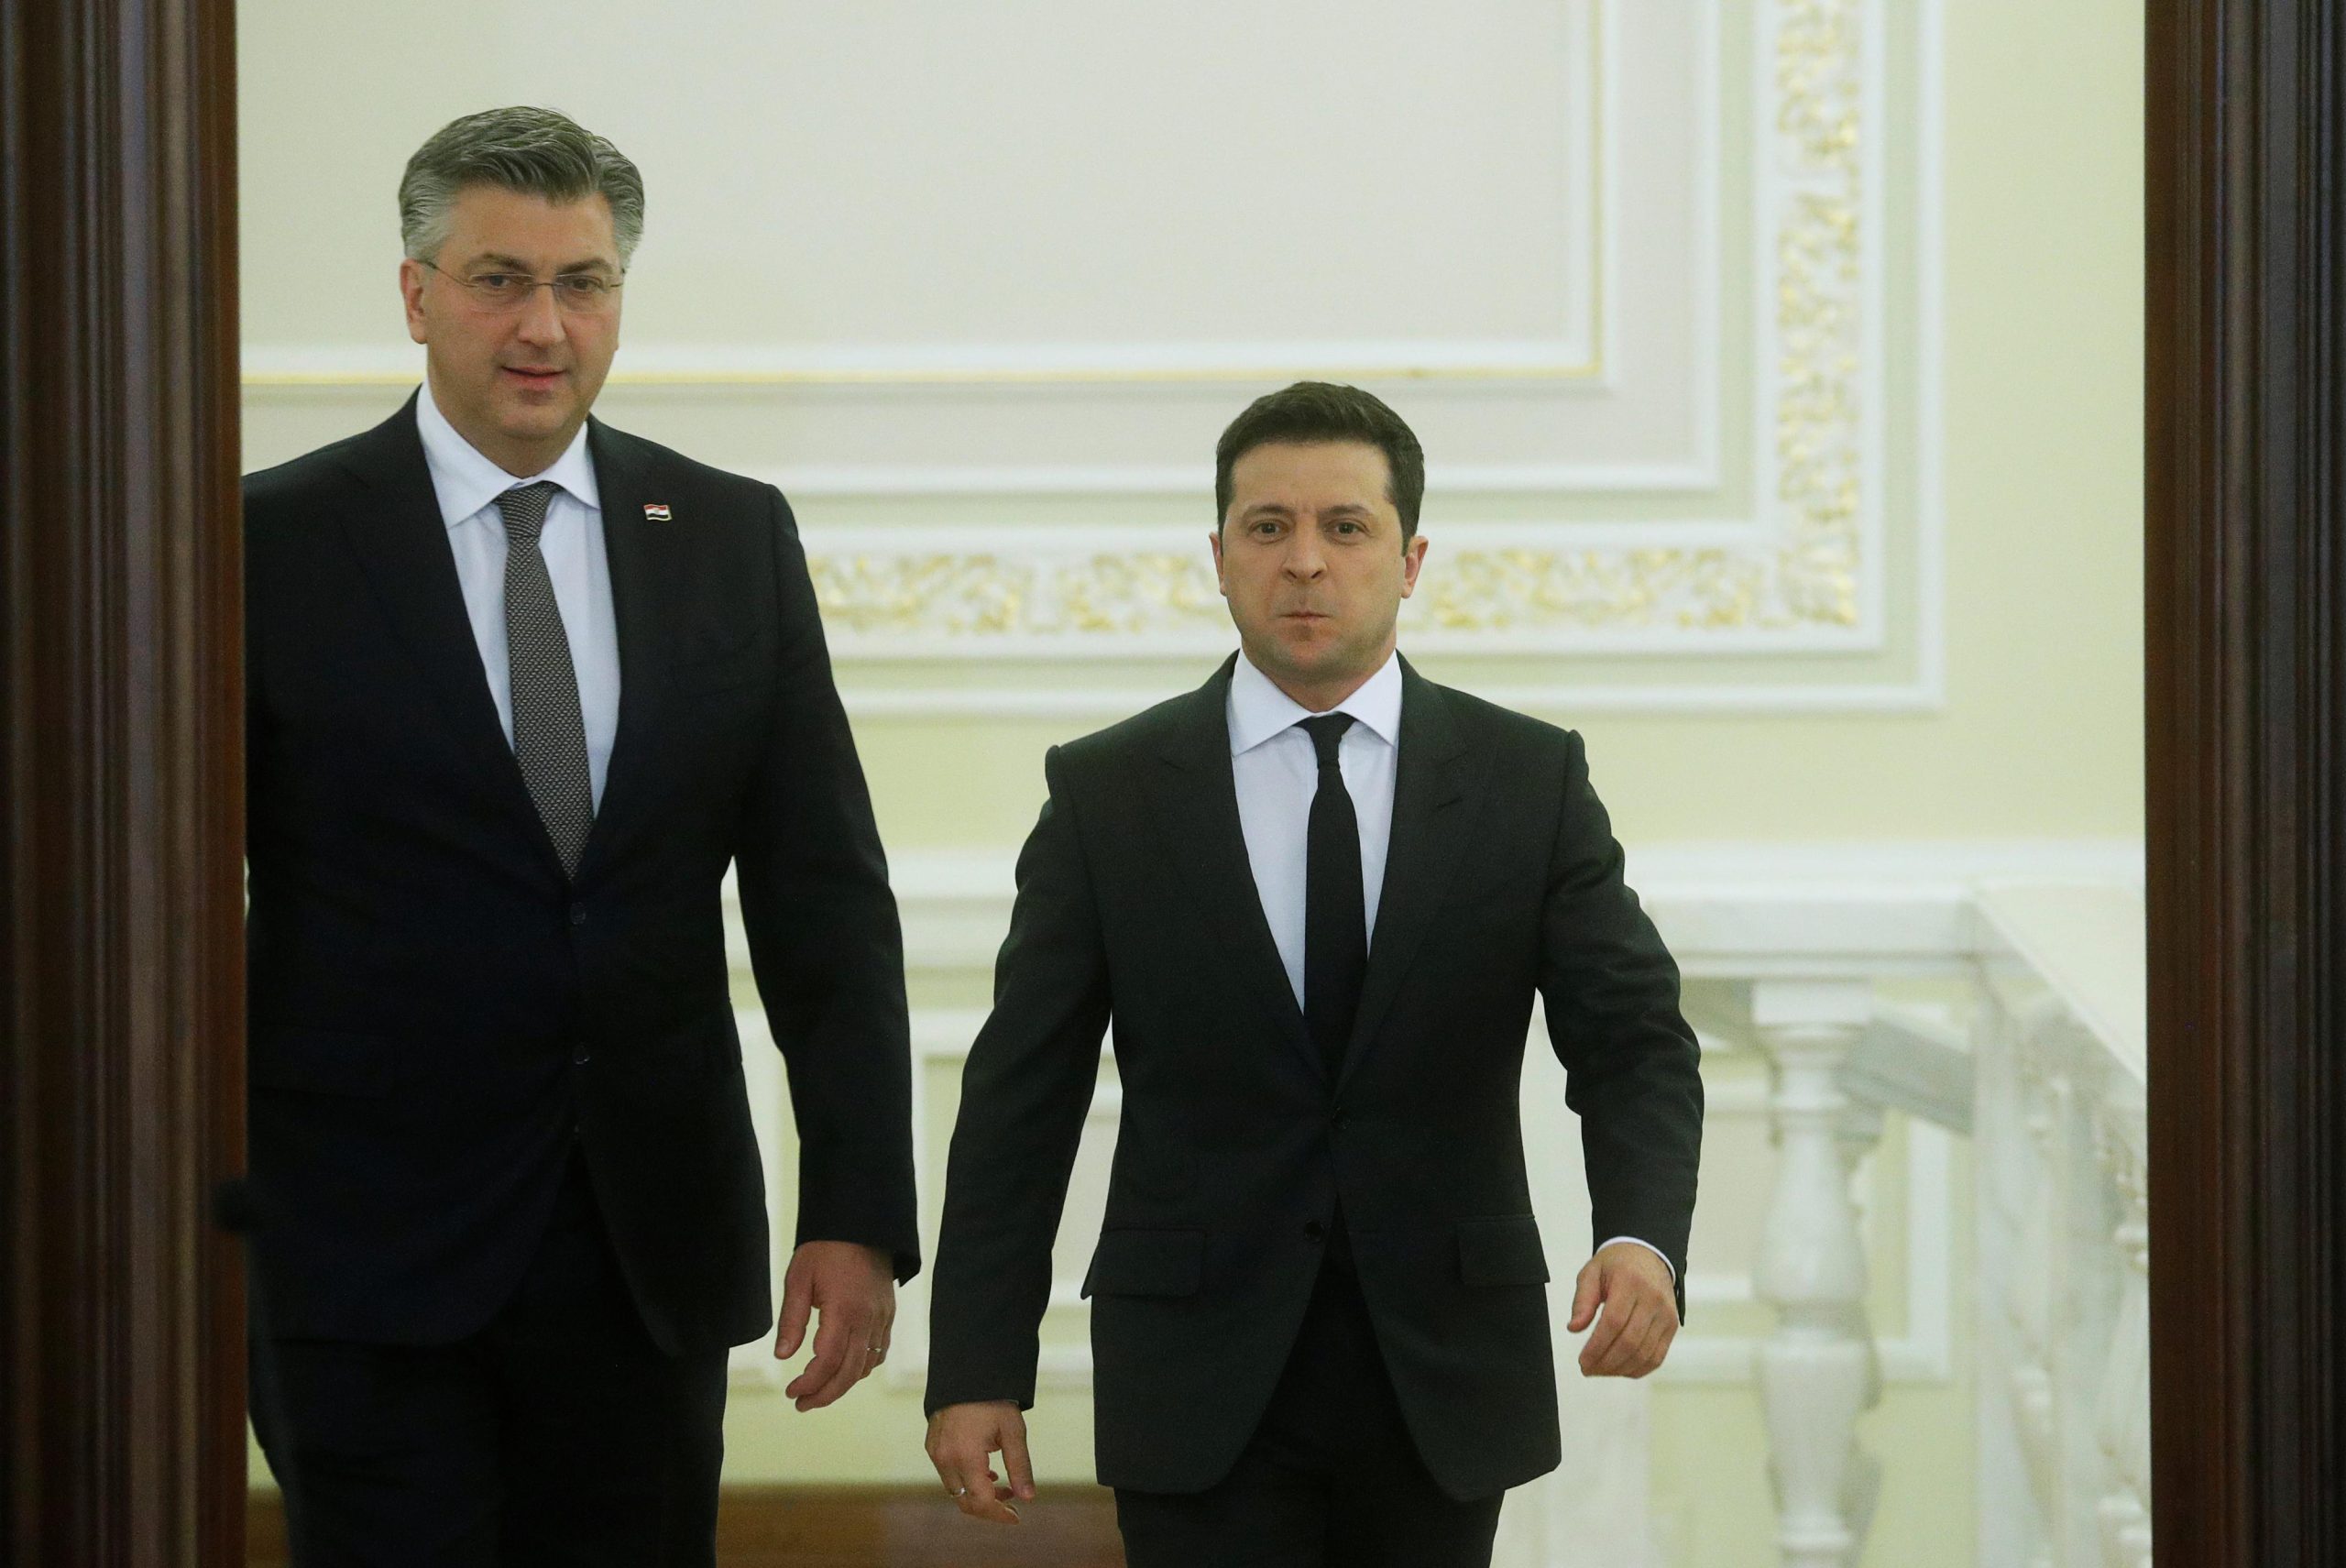 Ukrainian President Volodymyr Zelenskiy and Croatian Prime Minister Andrej Plenkovic arrive to deliver a joint statement in Kyiv, Ukraine December 8, 2021. REUTERS/Valentyn Ogirenko/Pool